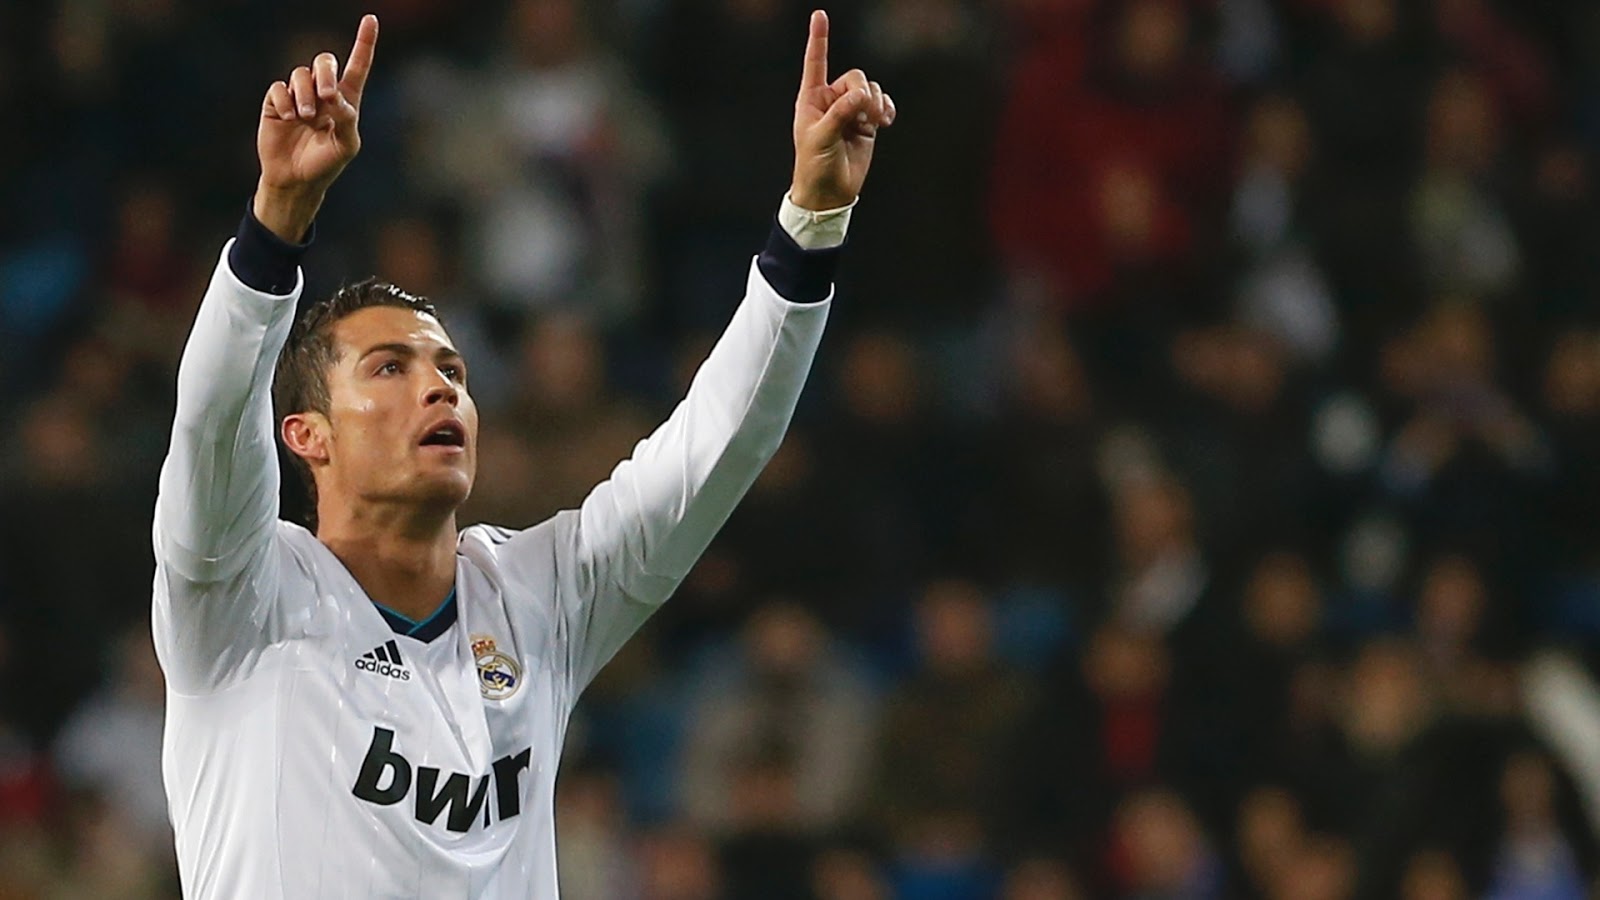 http://2.bp.blogspot.com/-Nv04dourGe4/UPngBRkwZqI/AAAAAAAAPJU/pQNIdBlzDXM/s1600/Cristiano-Ronaldo-2013-HD-Wallpaper-Picture-Real-Madrid-3.jpg